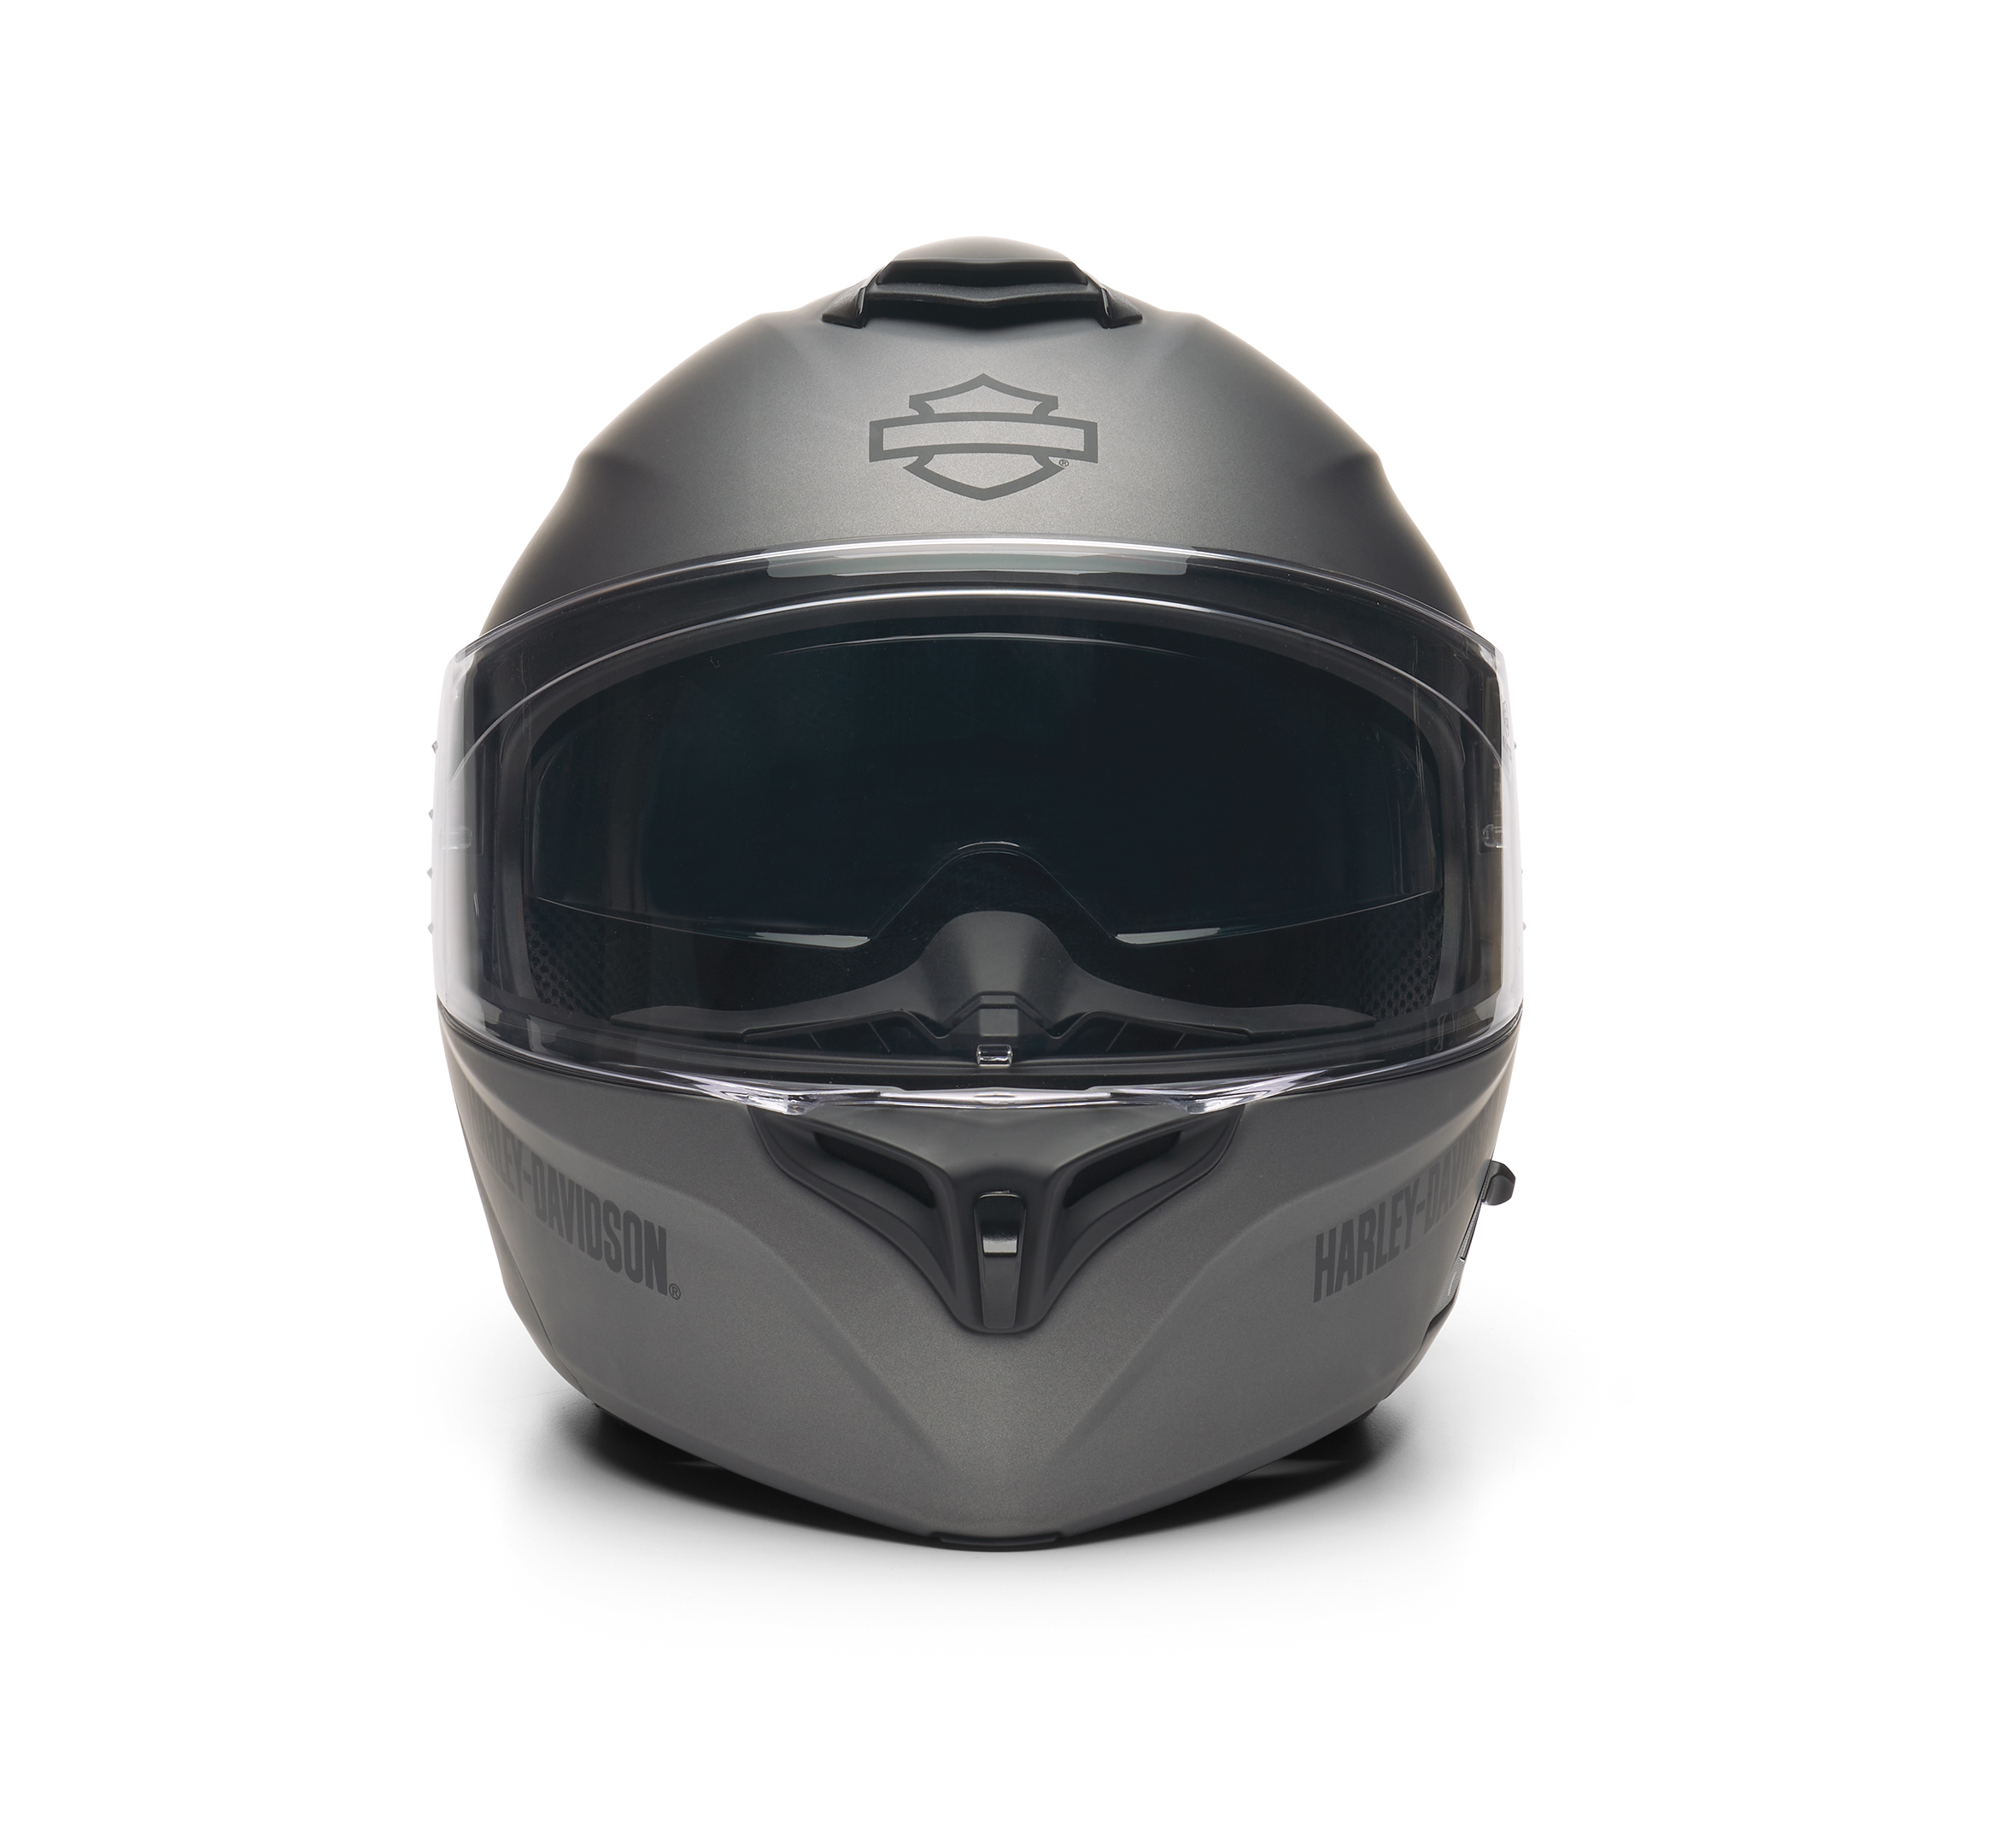 Outrush R Modular Bluetooth Helmet - Matte Silver | Harley-Davidson CA